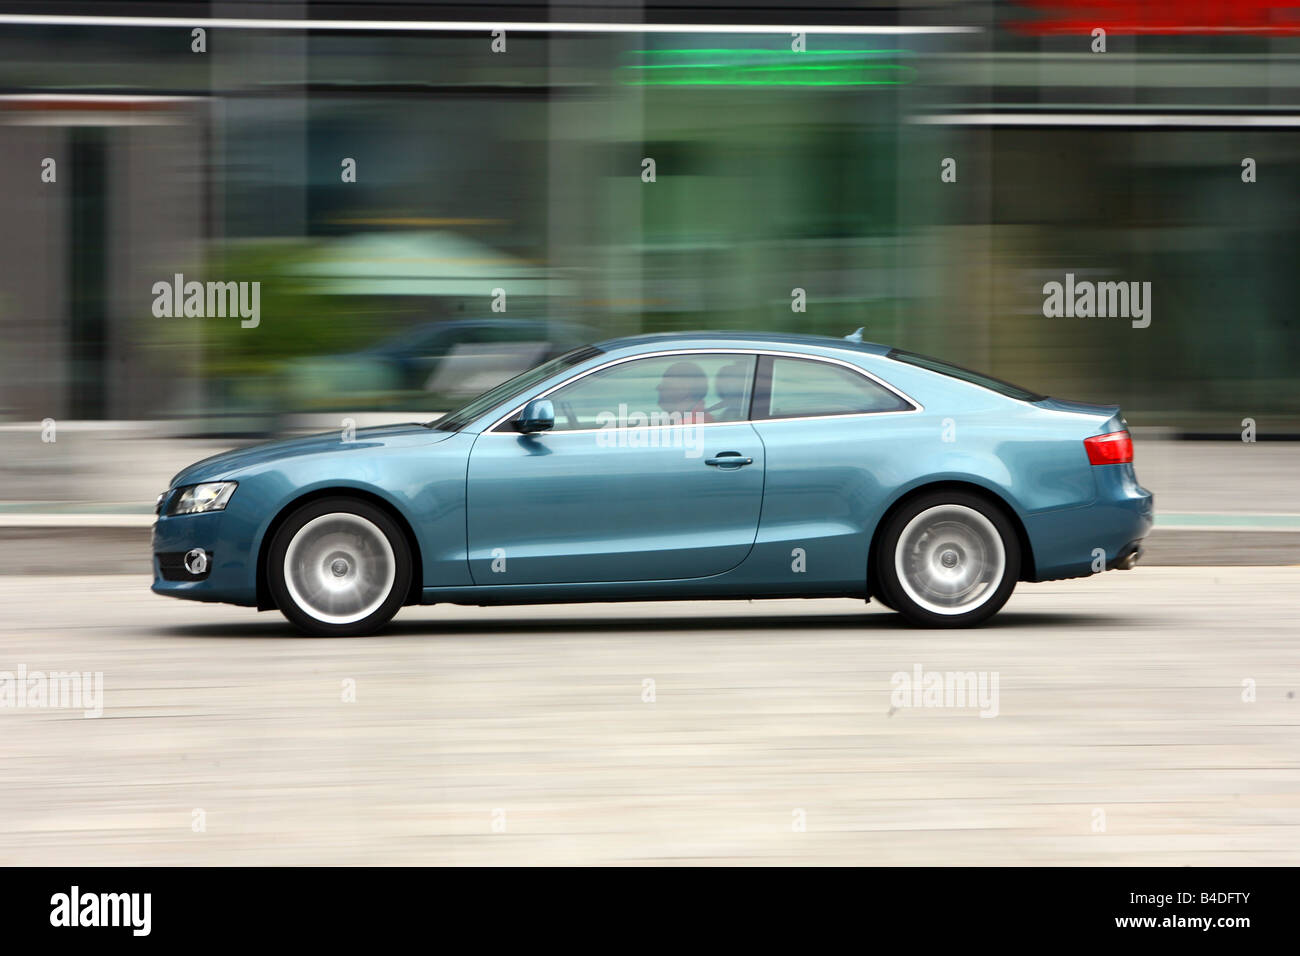 Audi 3 0 tdi quattro hi-res stock photography and images - Alamy